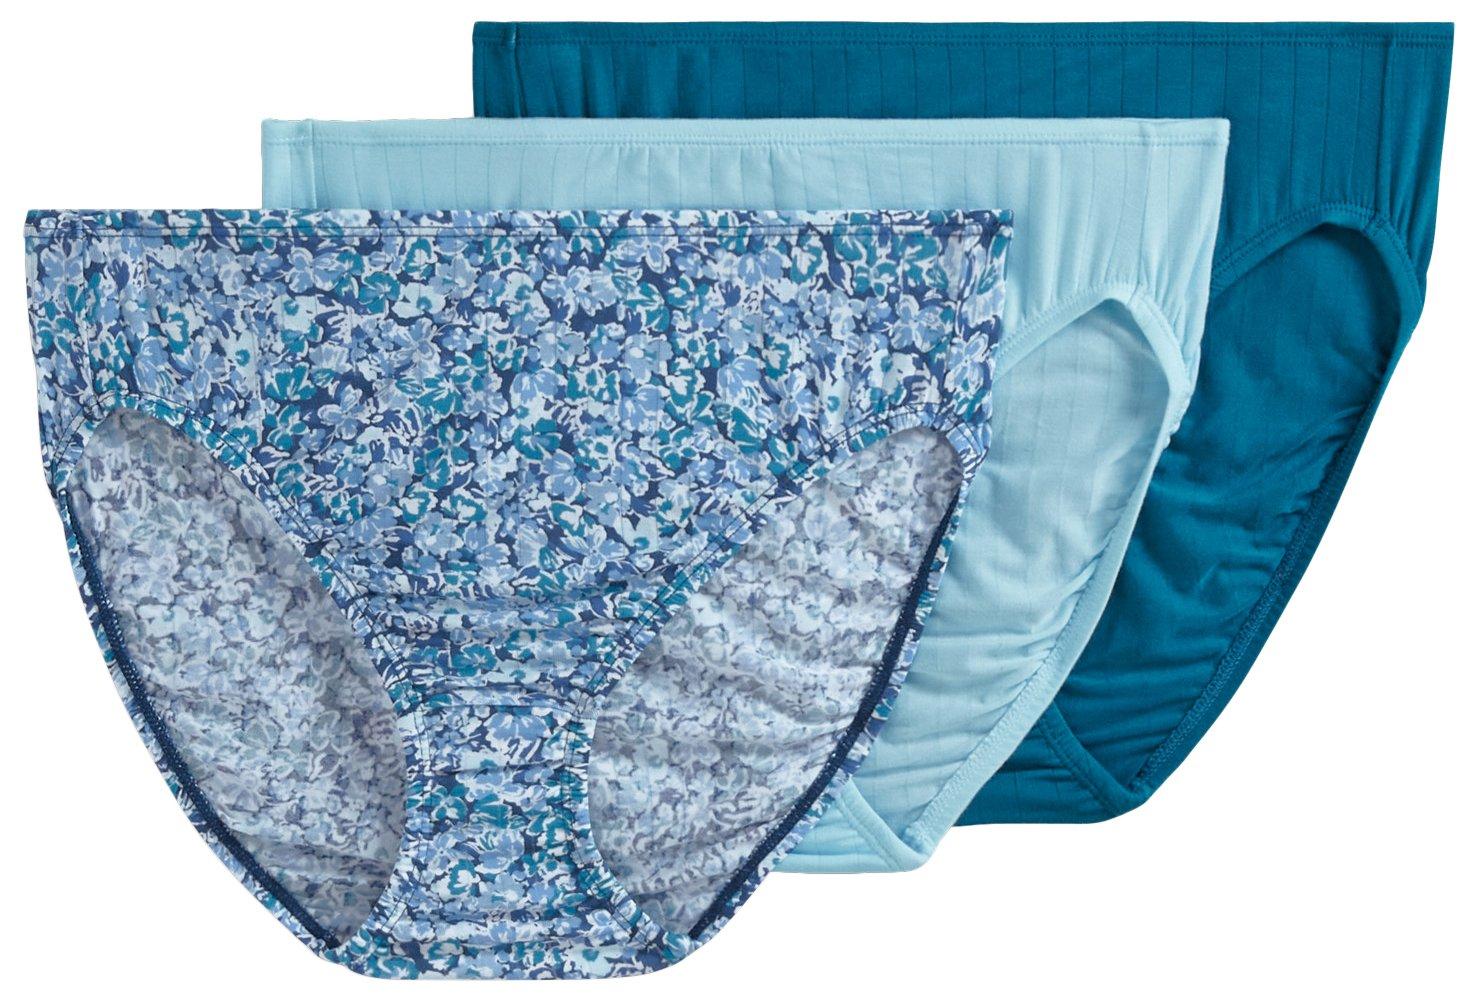 Elance Super Soft French Cut Underwear 3 Pack 2071